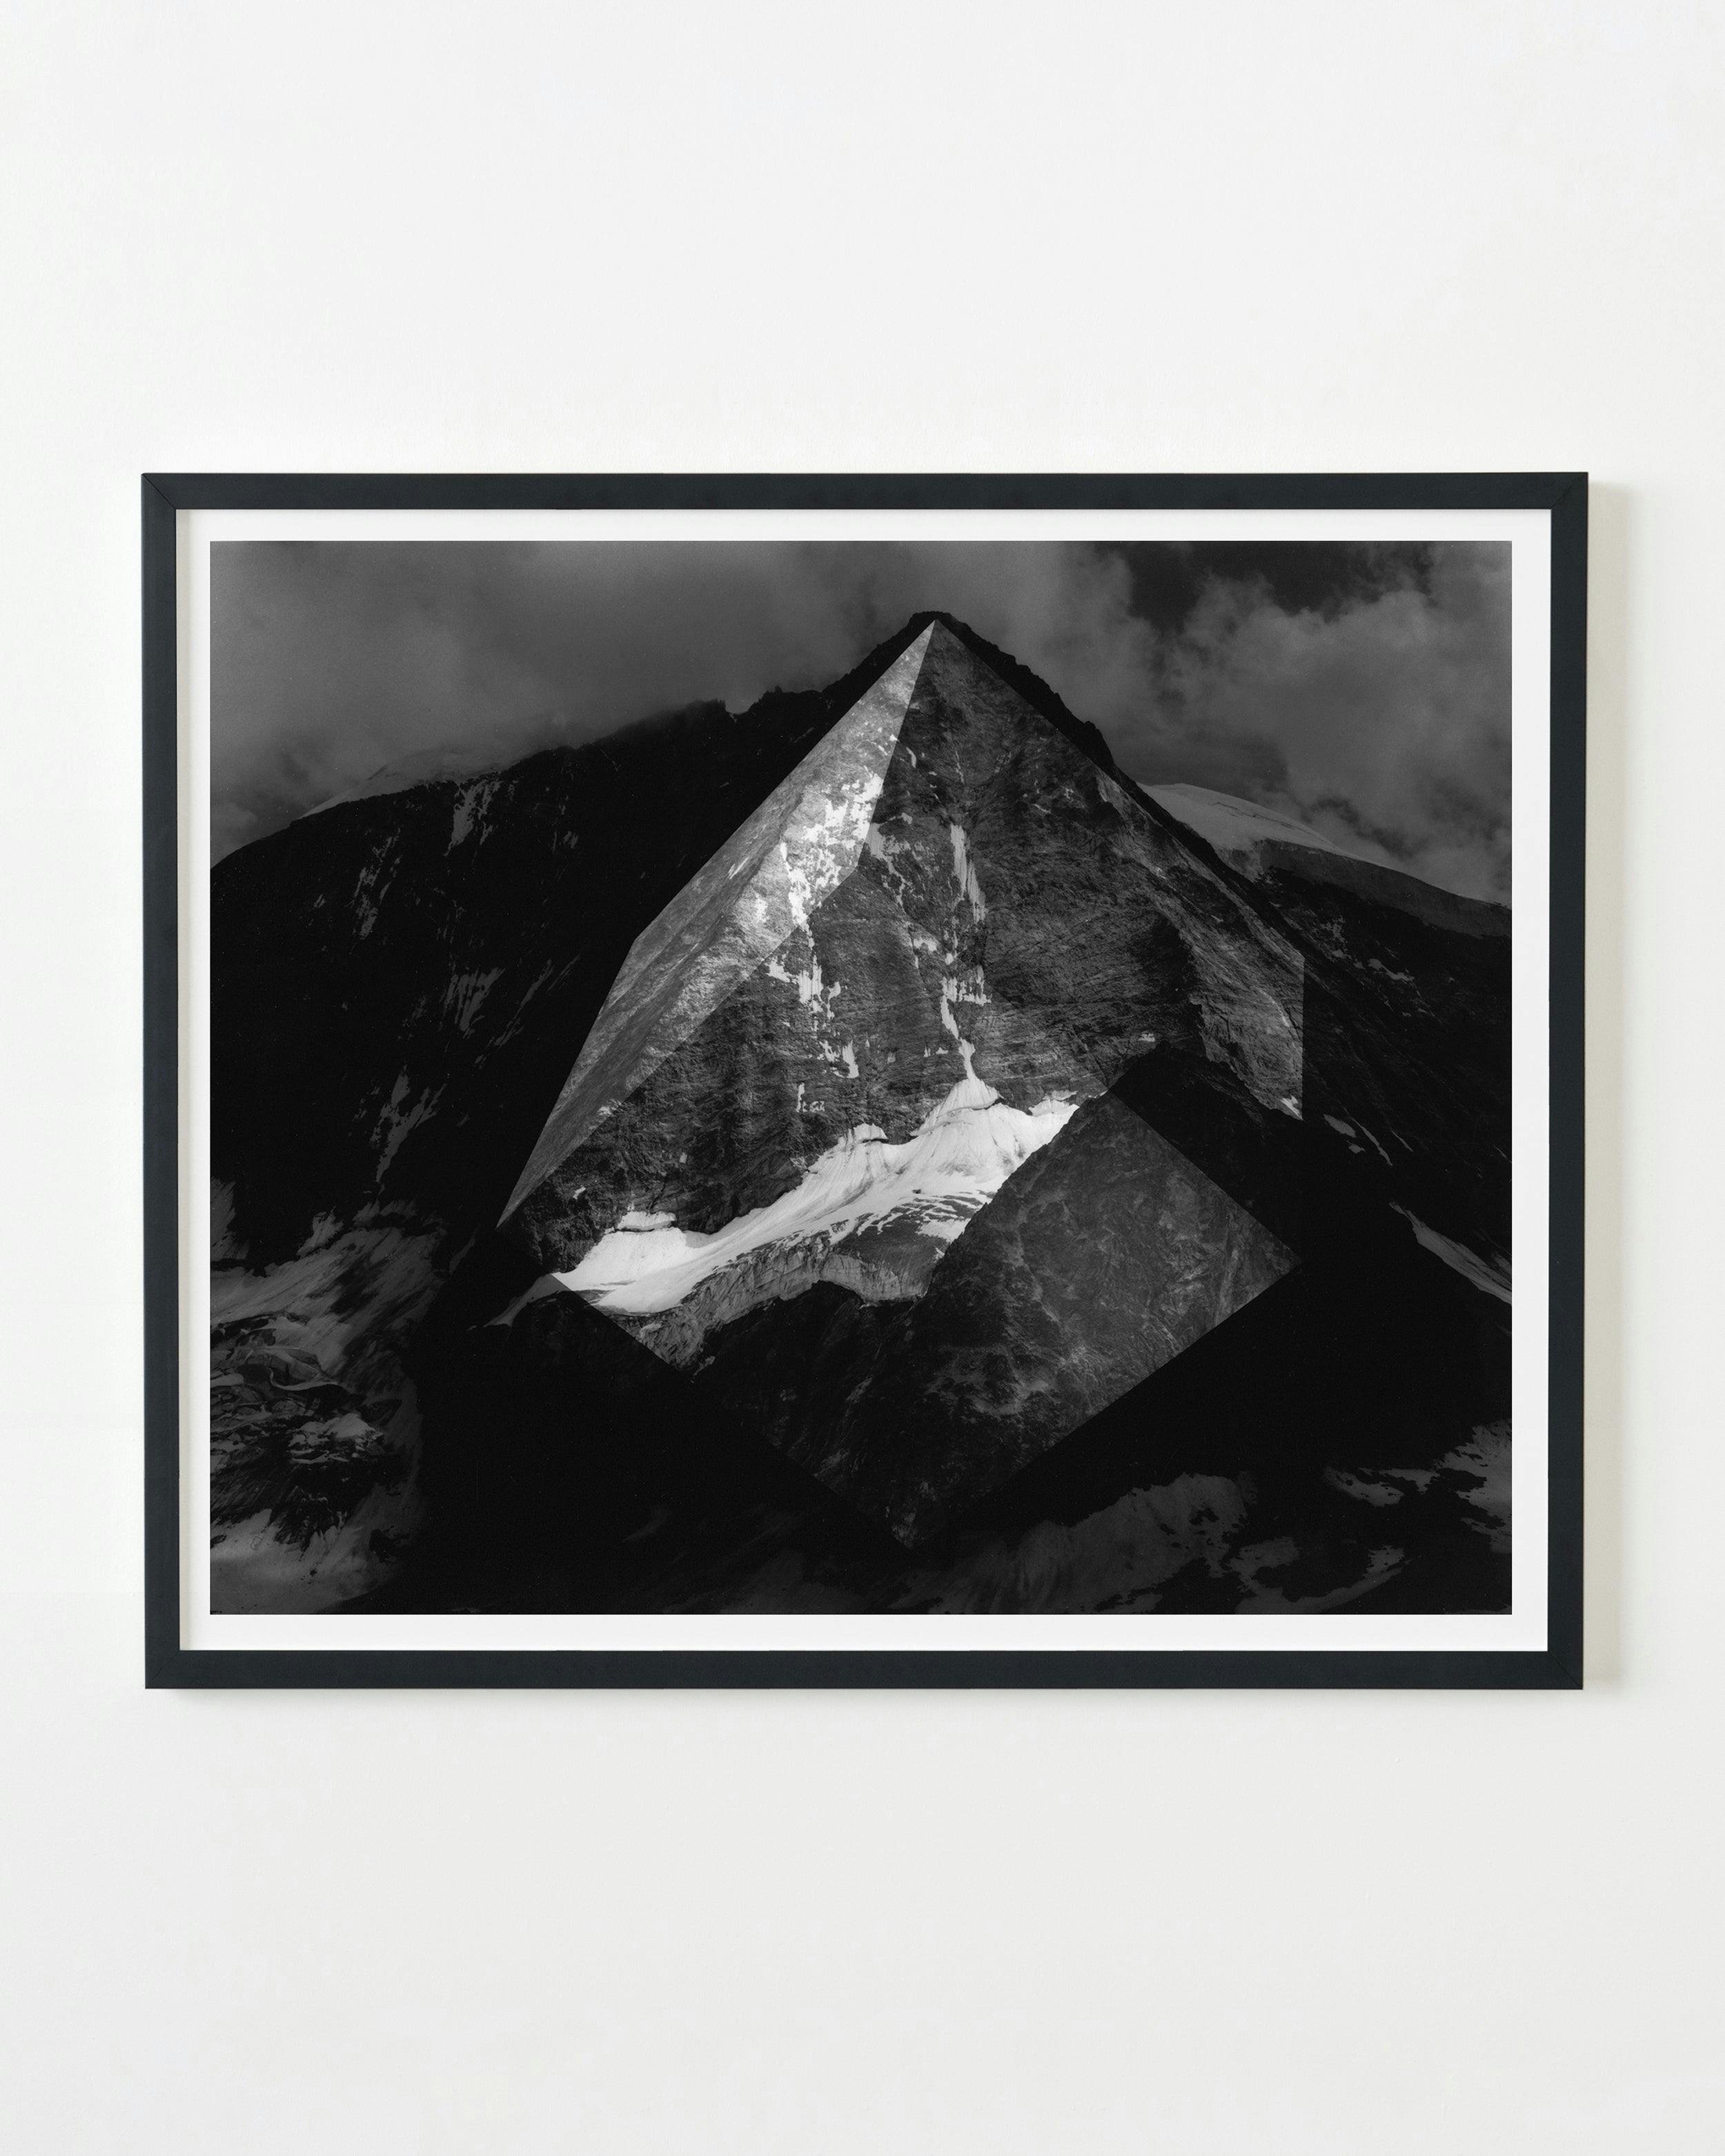 Photography by Millee Tibbs titled "Hexahedron / Mont Blanc de Cheilon: Crux".